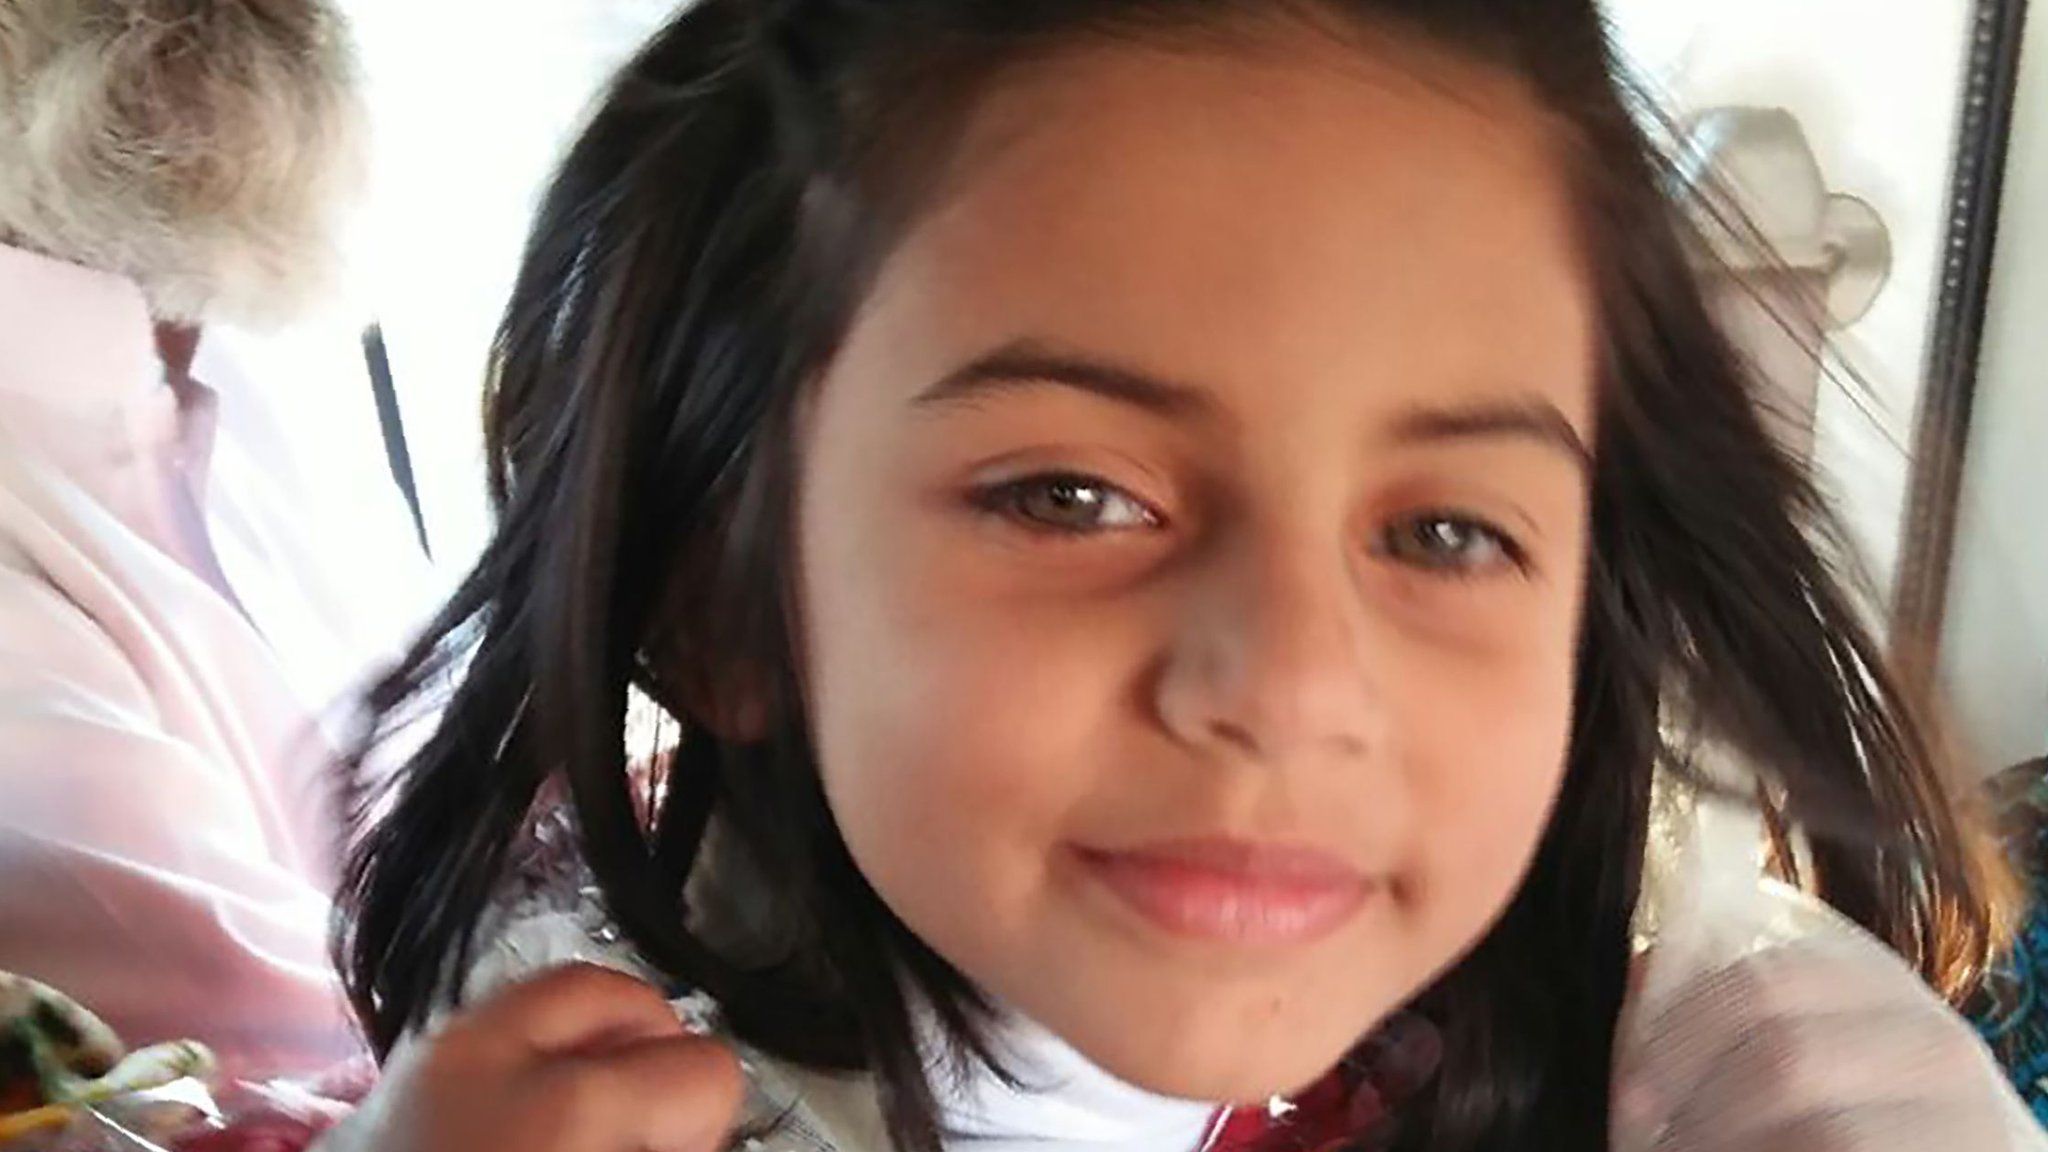 Zainab Ansari, who was murdered in Pakistan, aged six